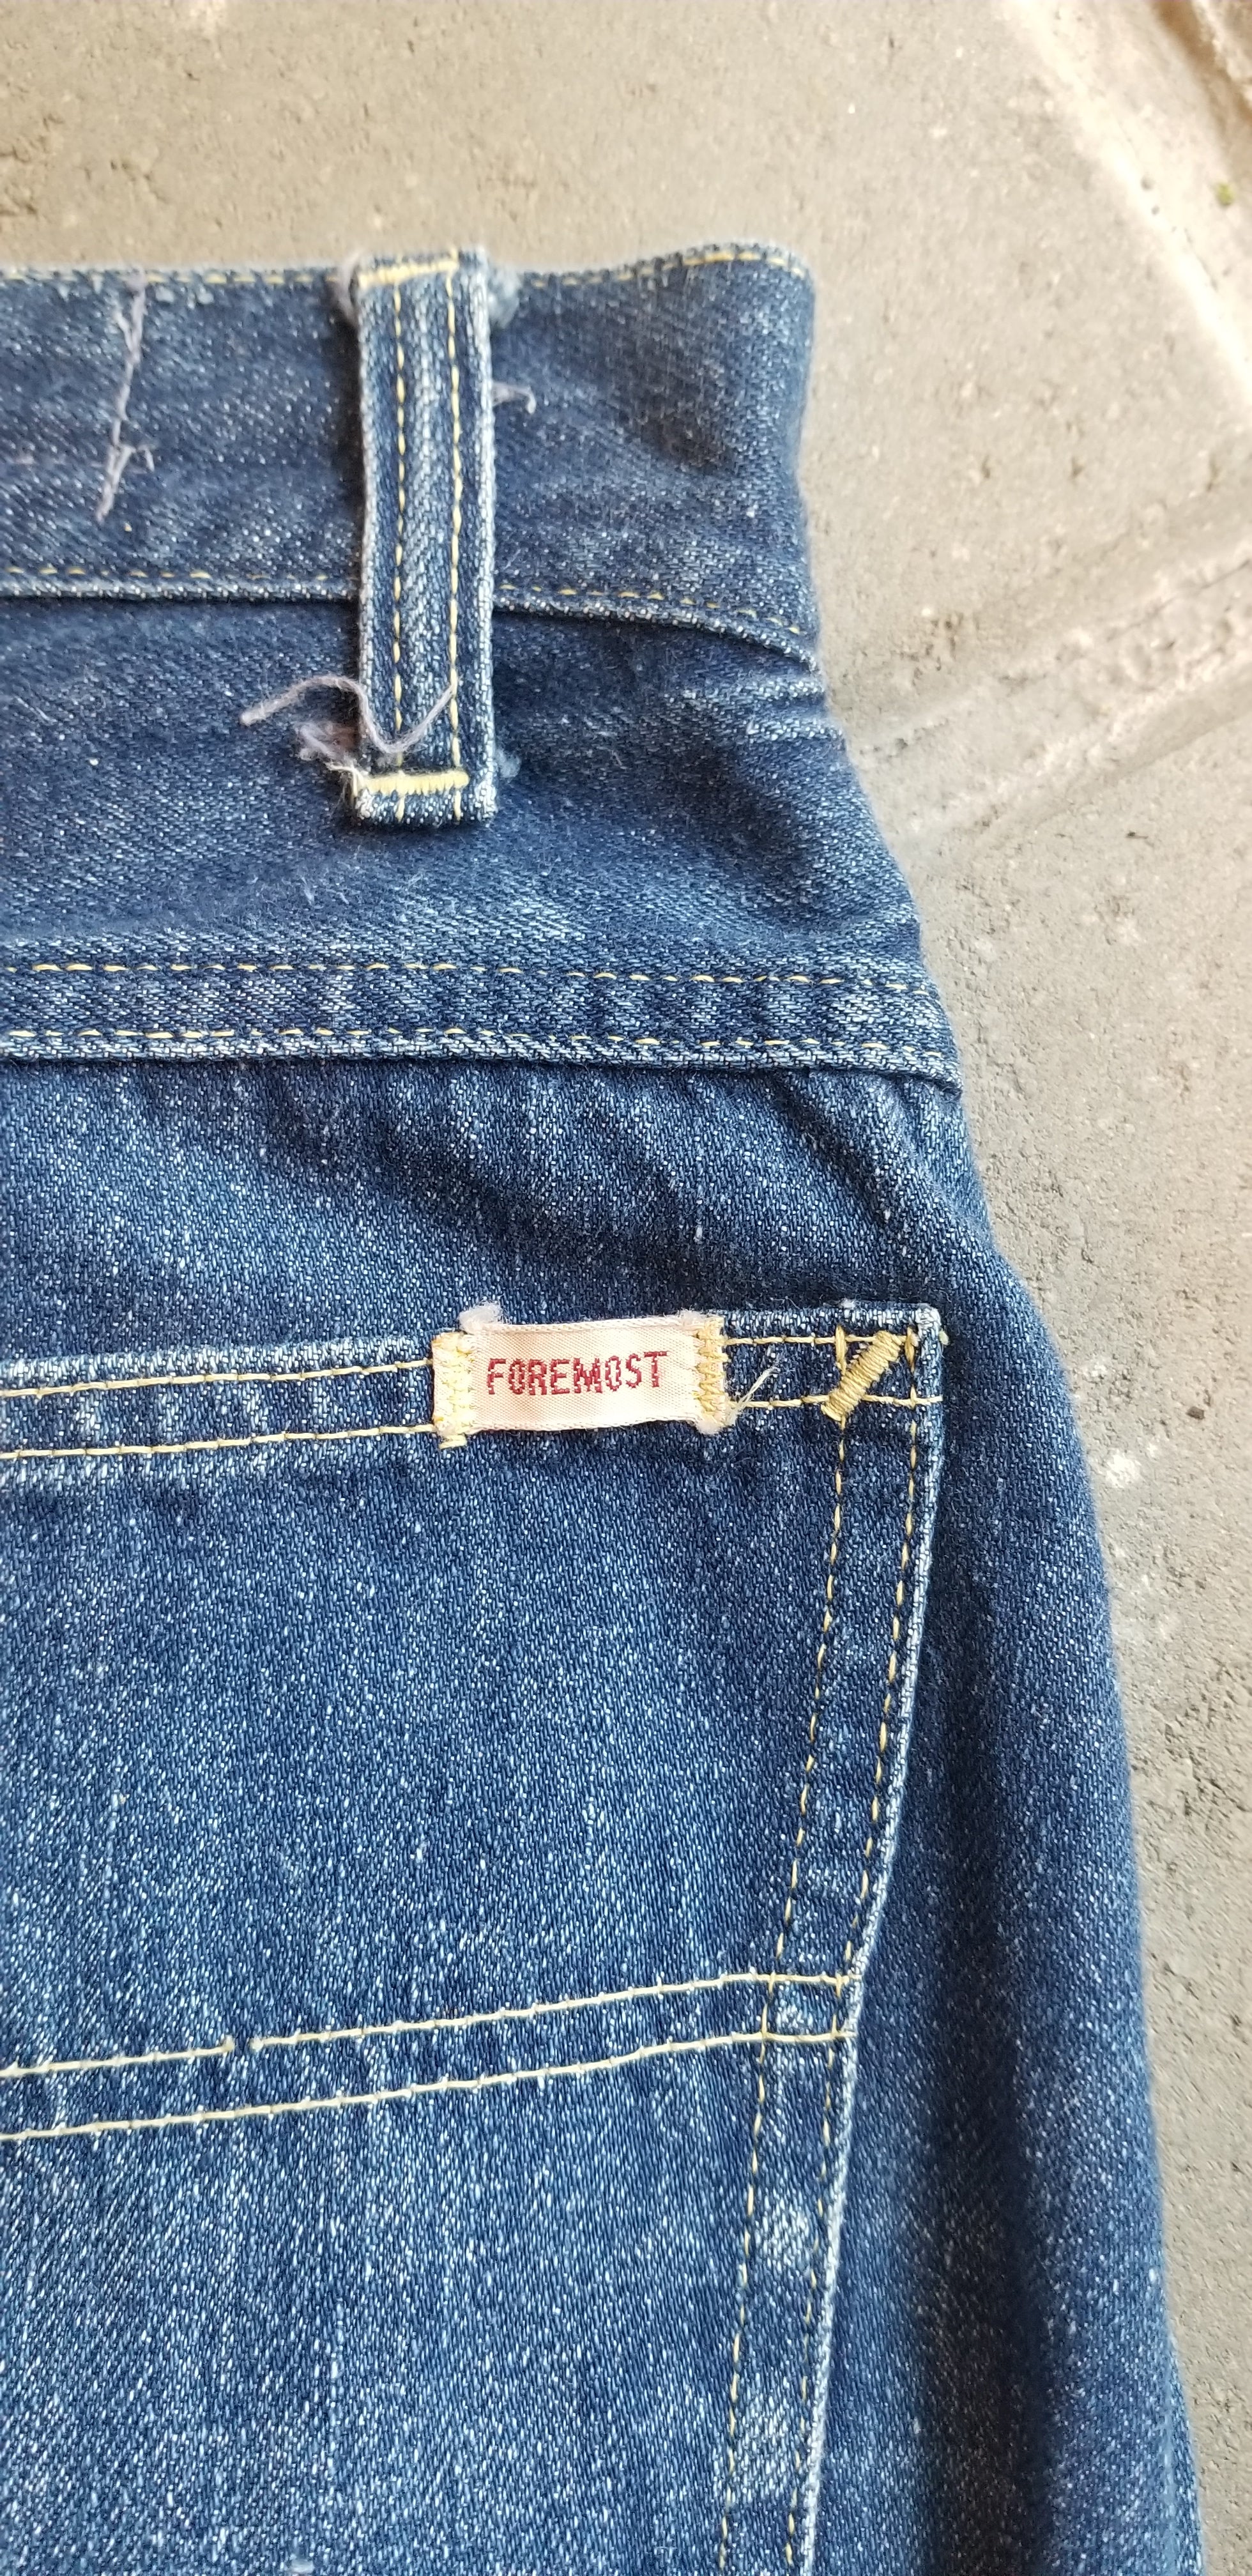 Vintage 50's Penney's Foremost Misses Jeans